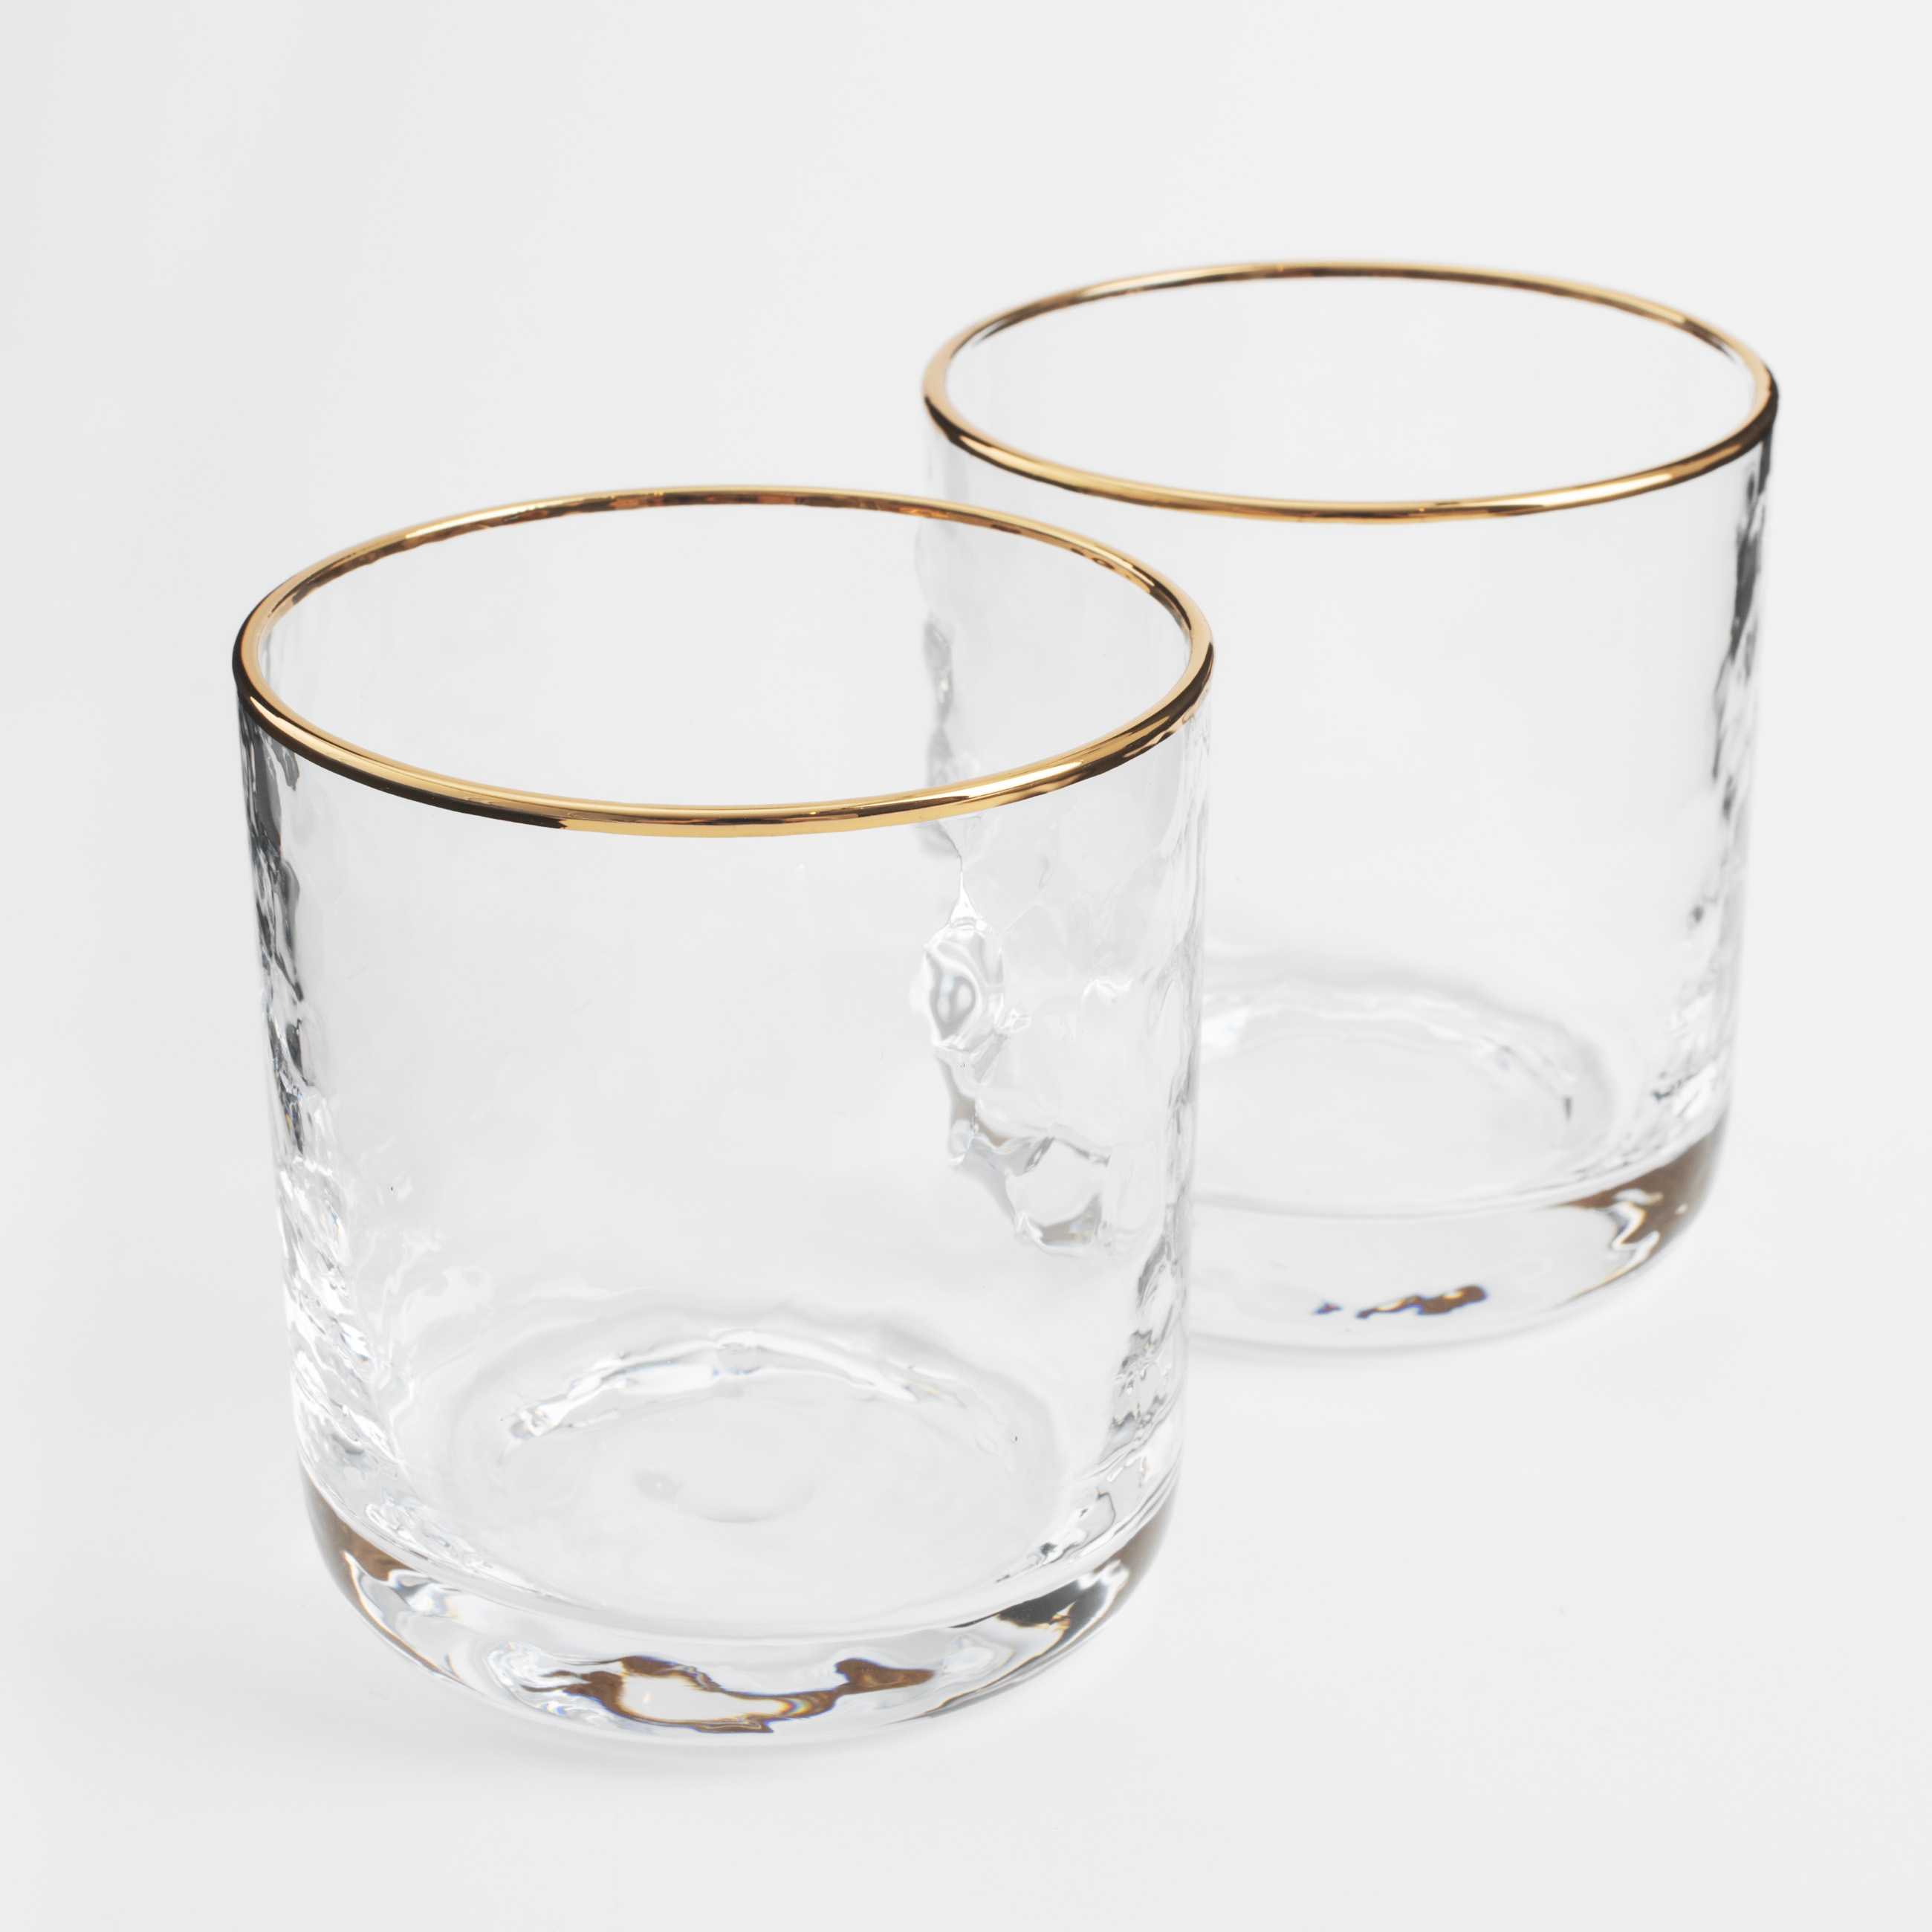 Glass, 330 ml, 2 pcs, glass, with golden edging, Liomea gold изображение № 2